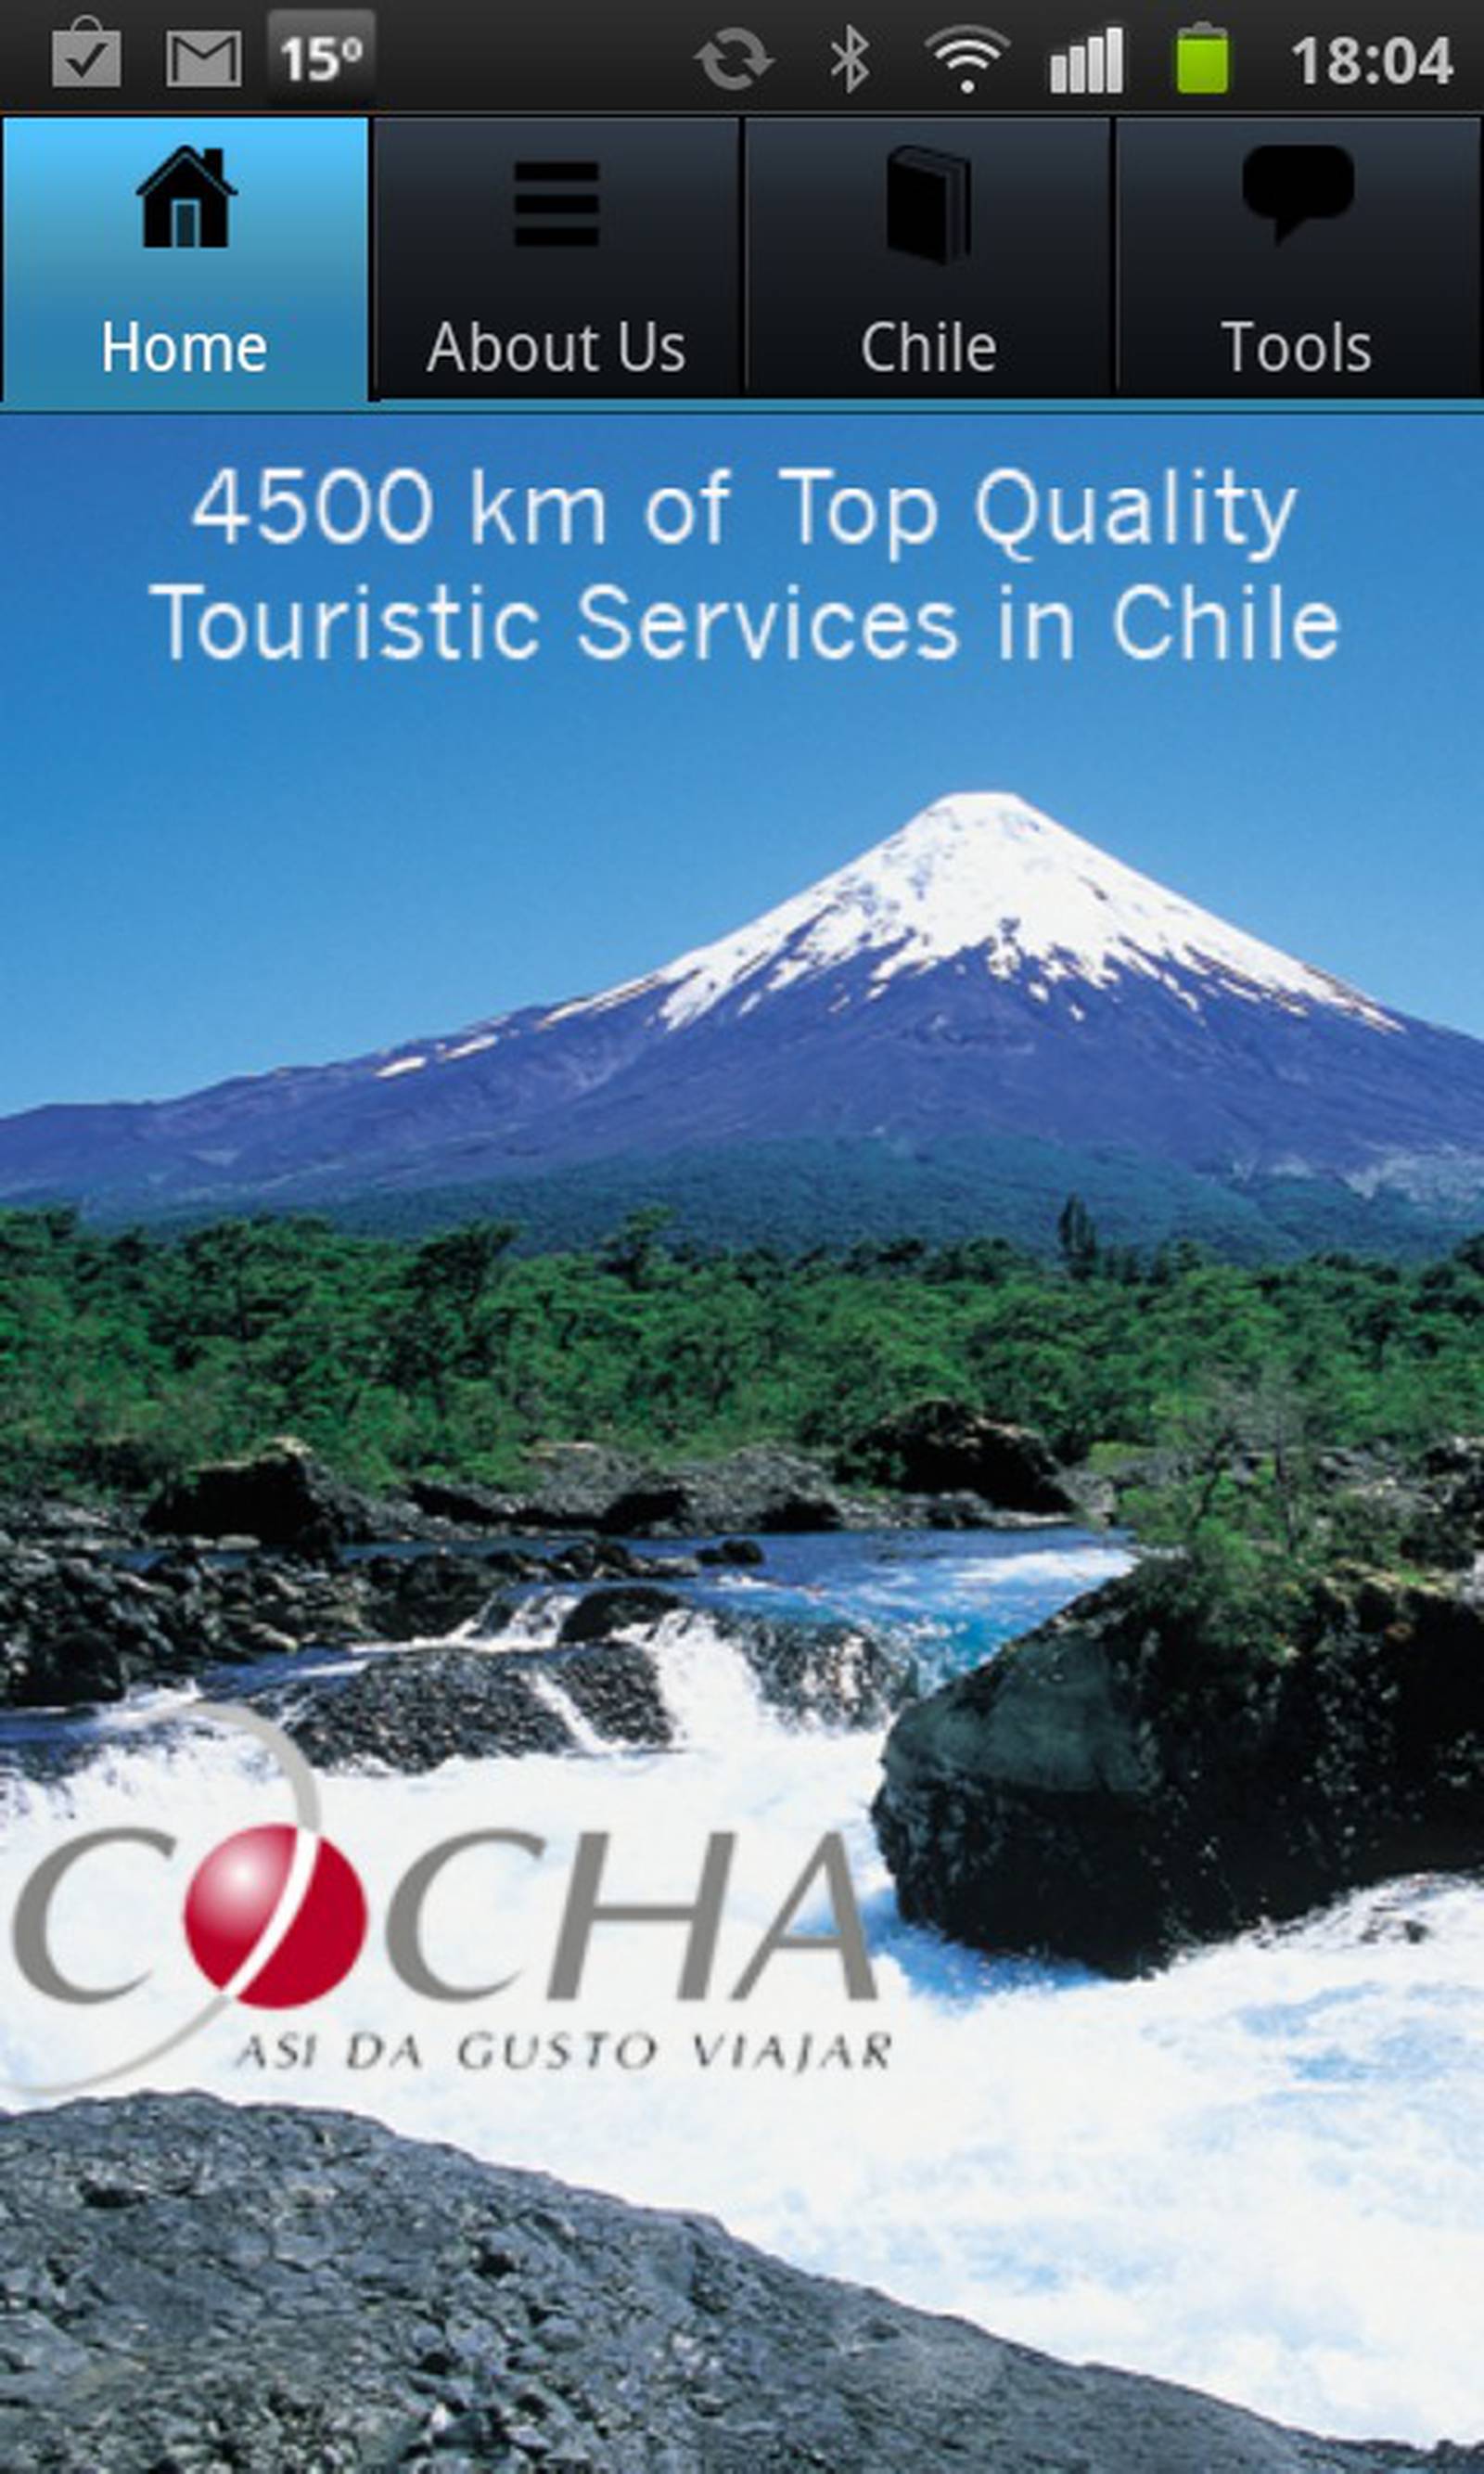 cocha travel agency chile